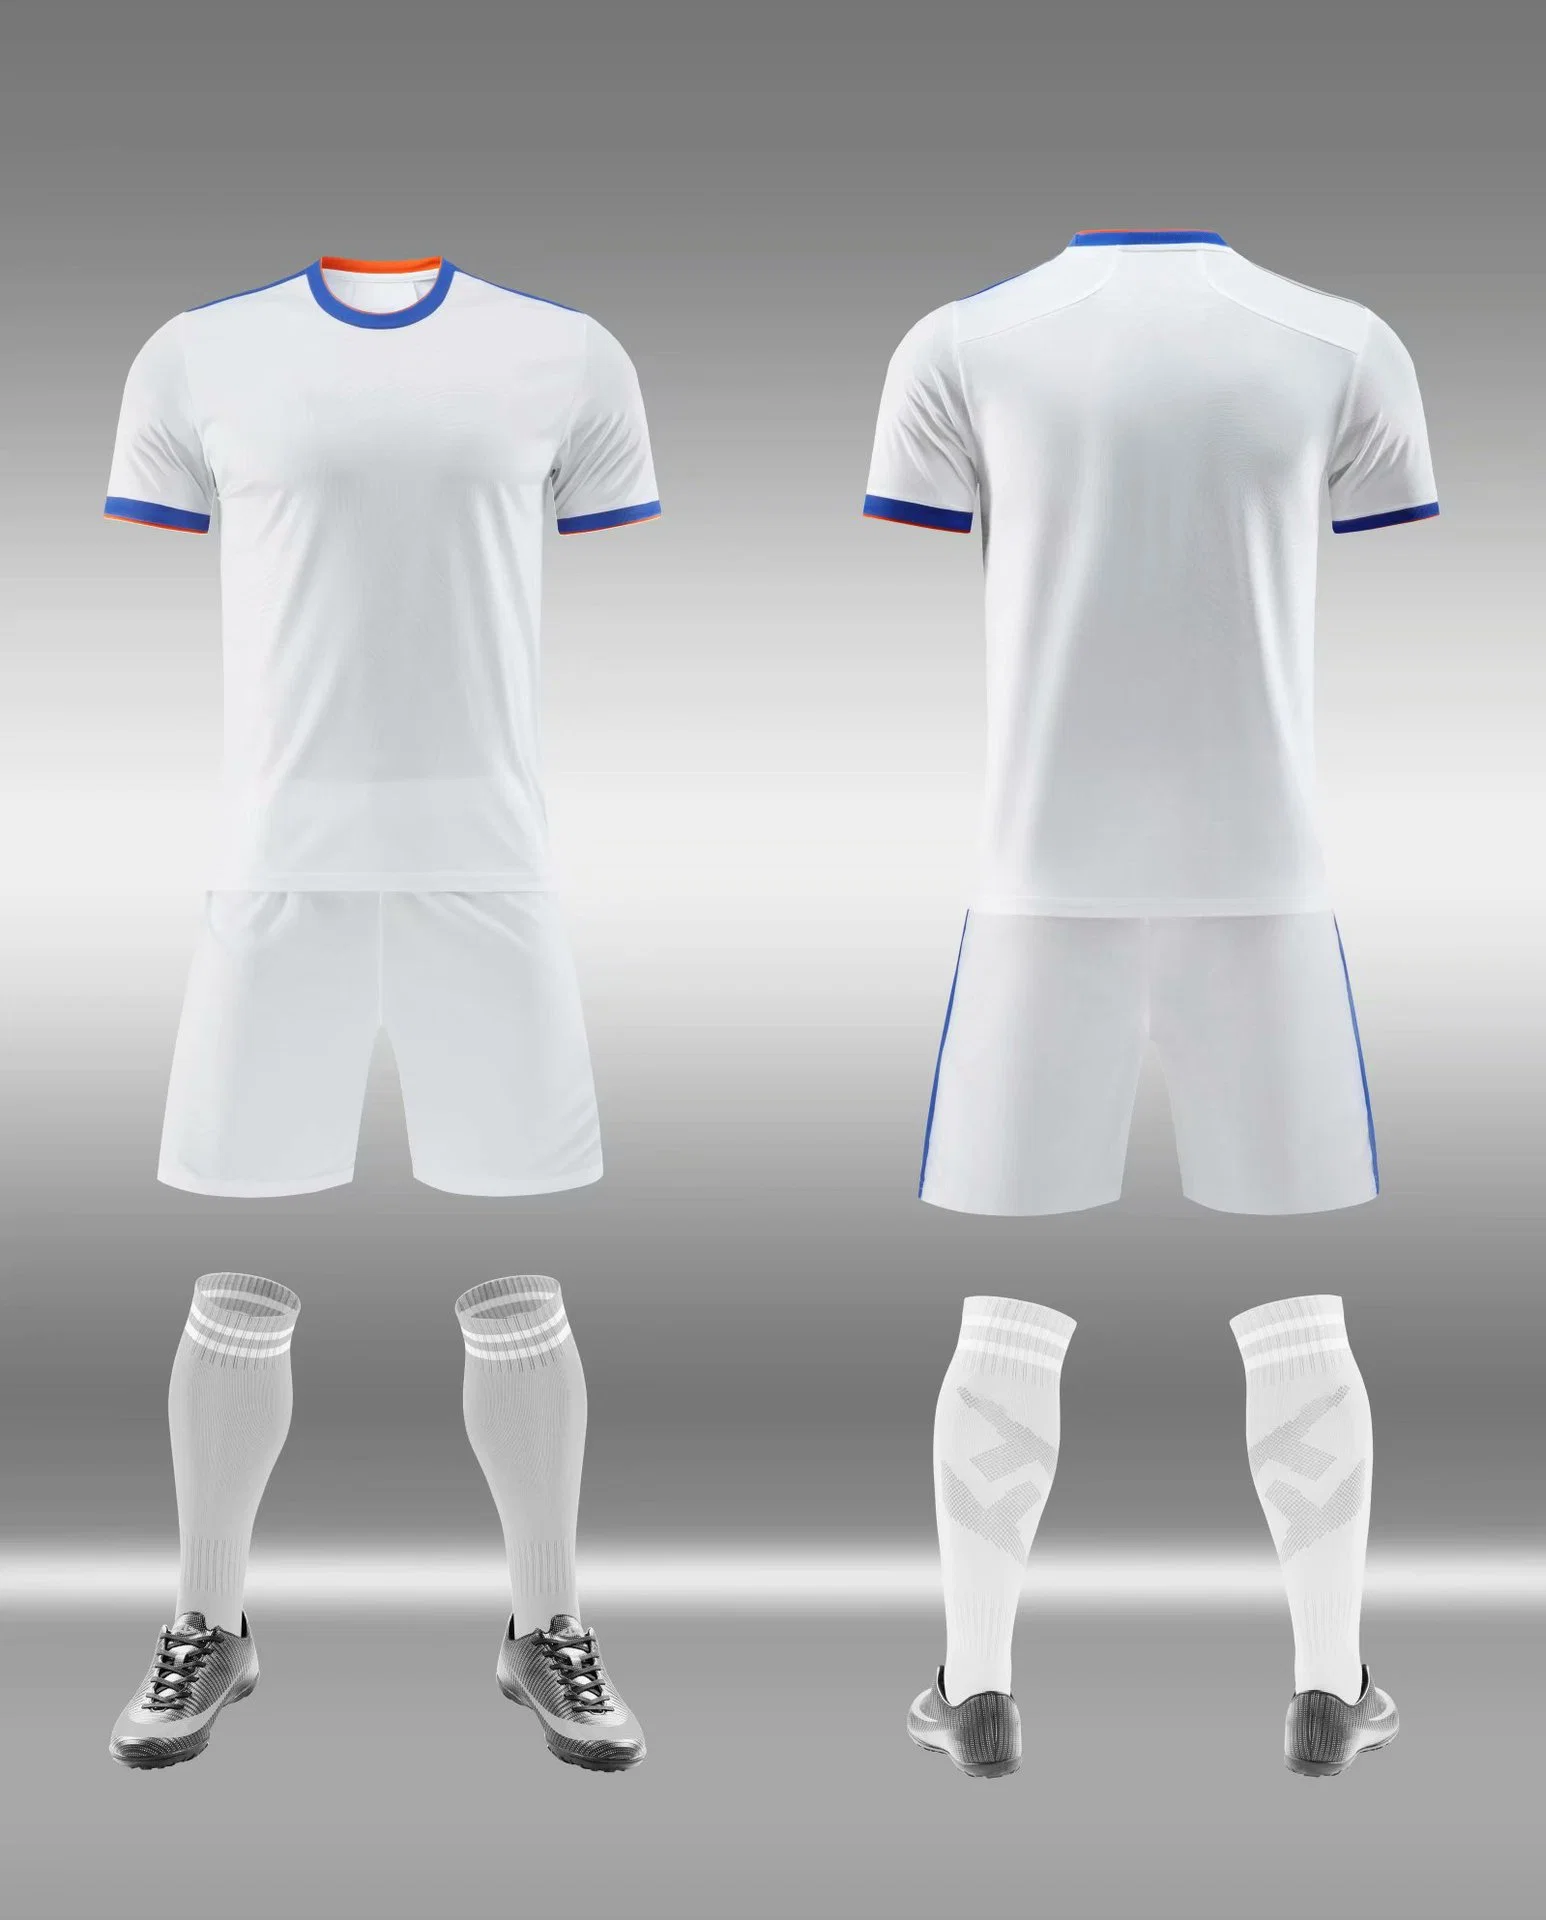 Men's New Design Football Jersey Hot Sales 2 PCS Set Soccer Uniform Custom Logos Football Club Training Wear